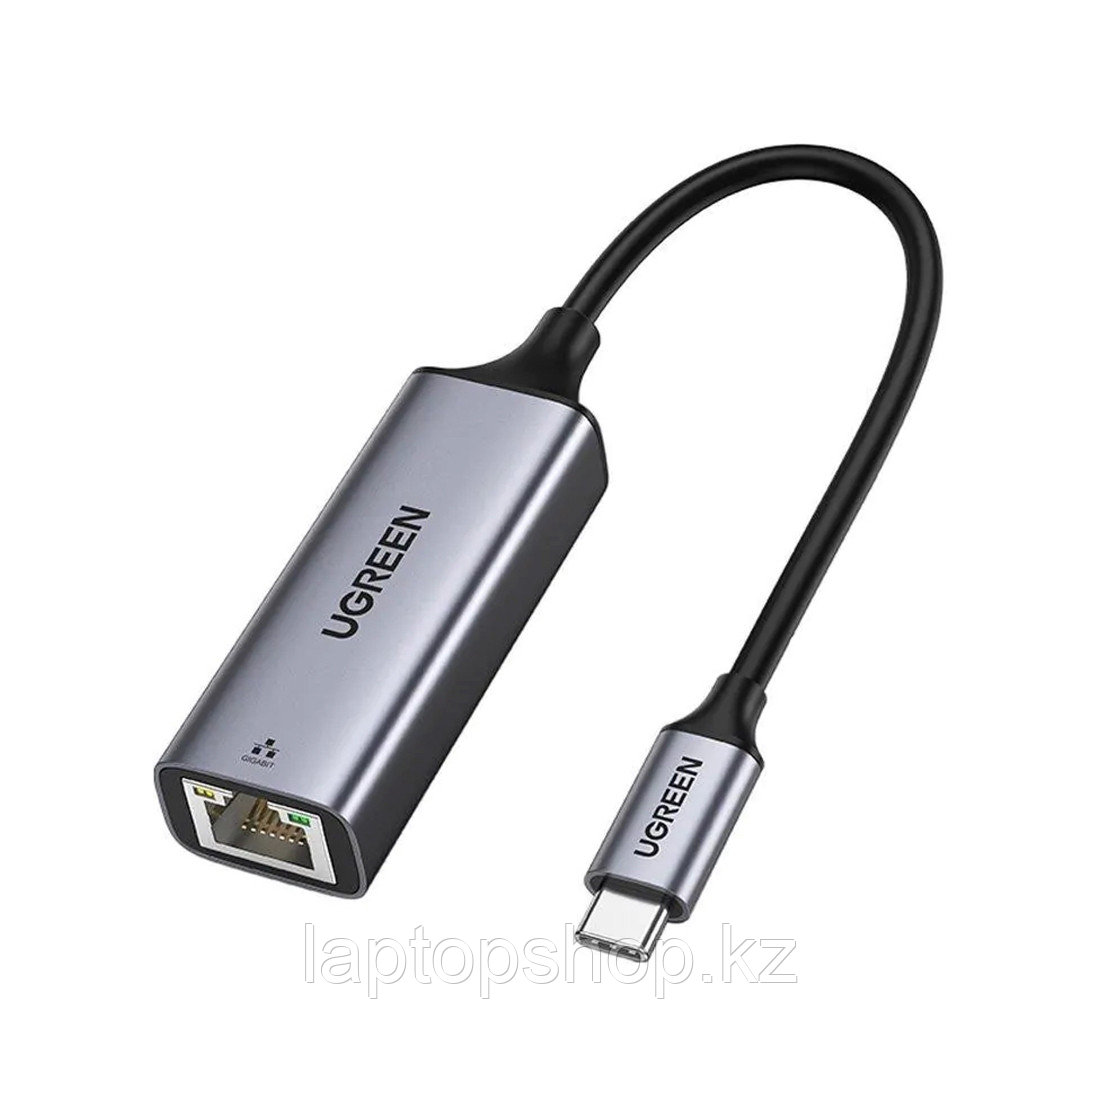 Адаптер Ugreen CM199 USB-C на Ethernet Port, фото 1